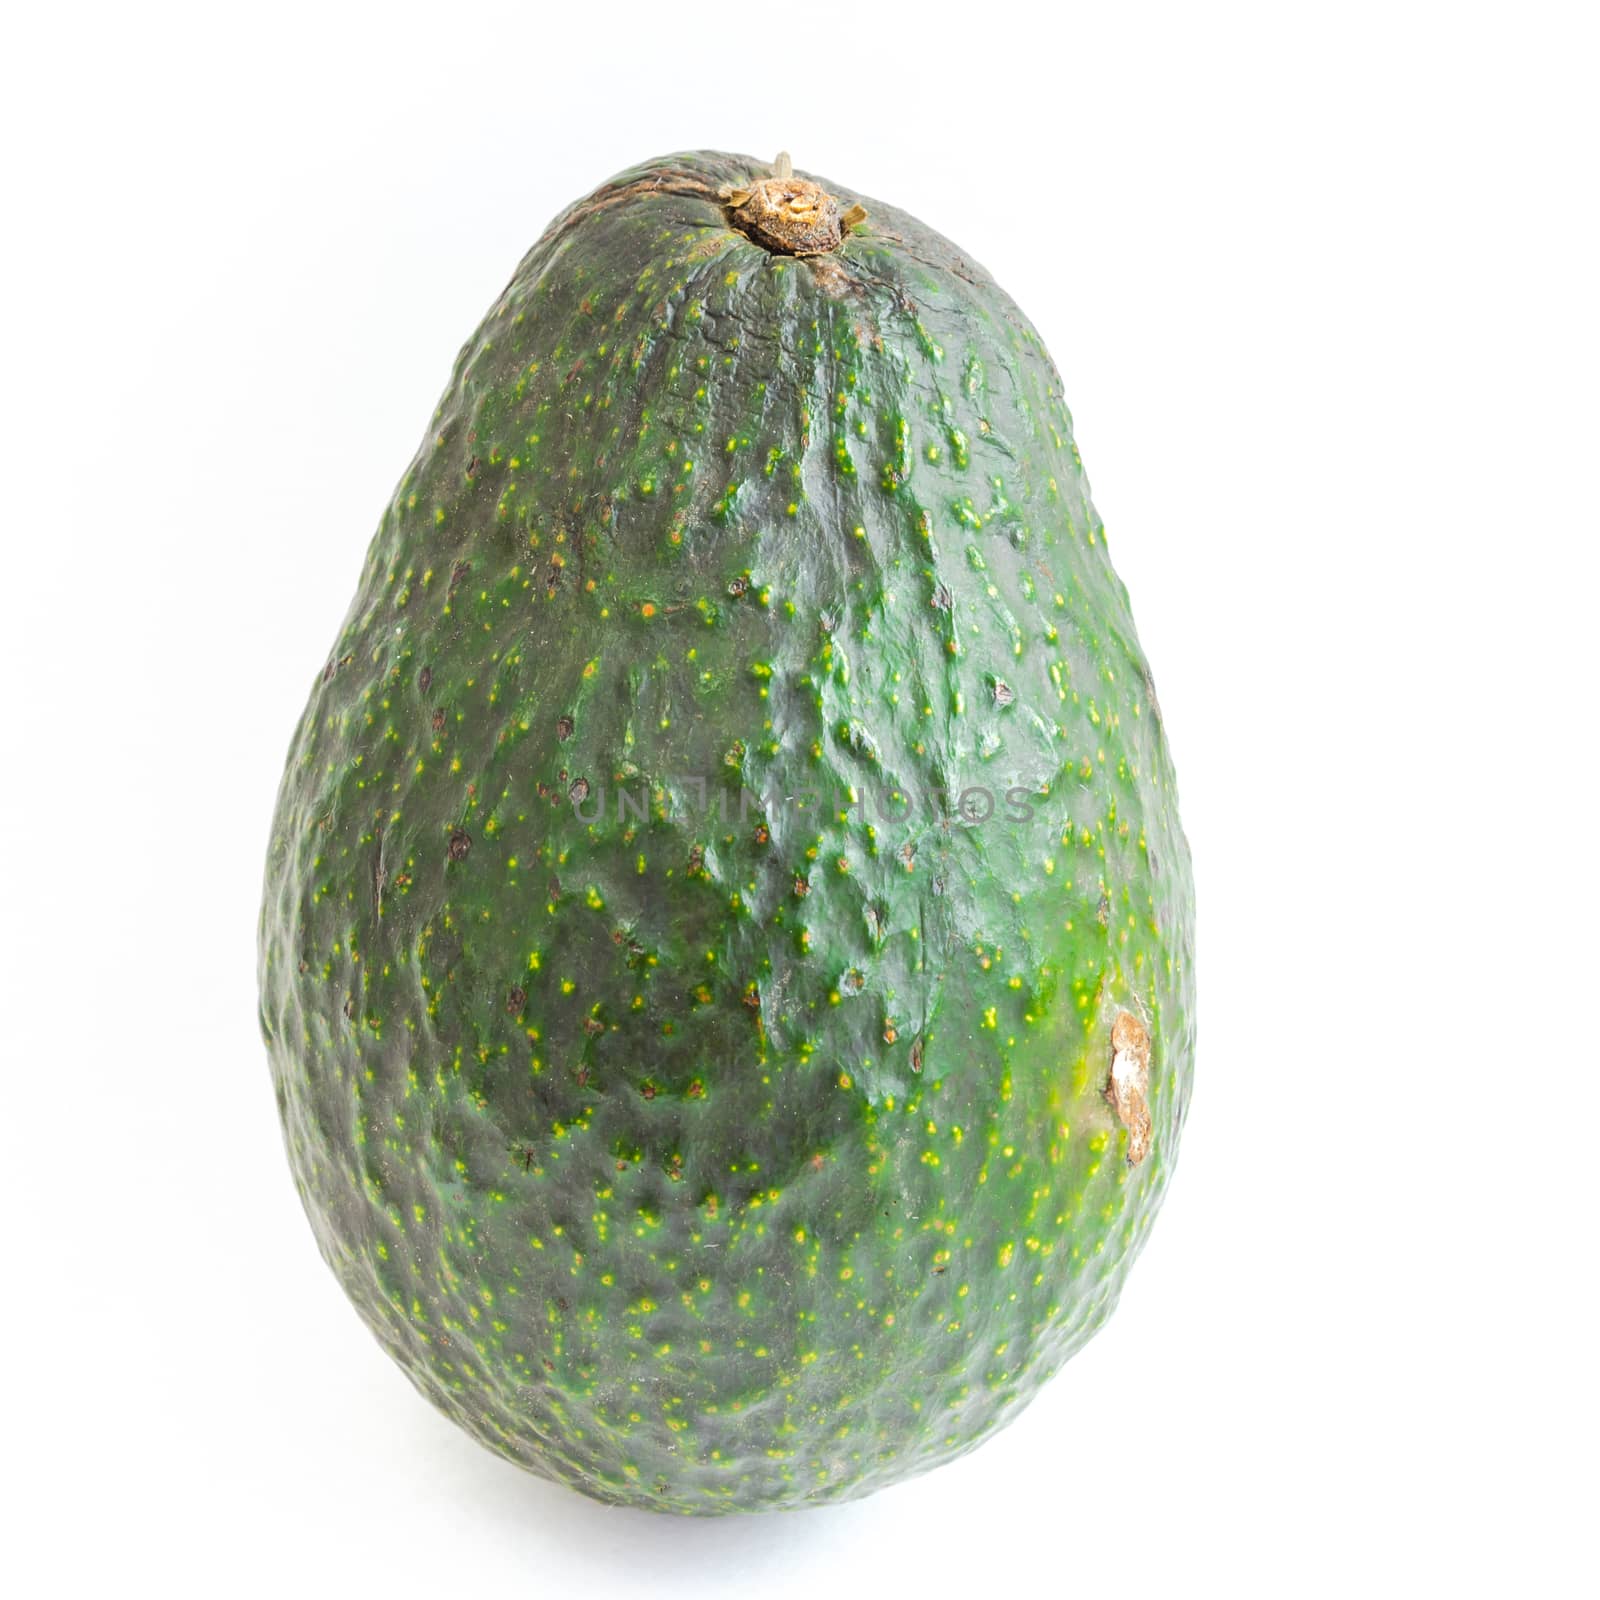 Studio shot single green avocado isolated on white background by trongnguyen